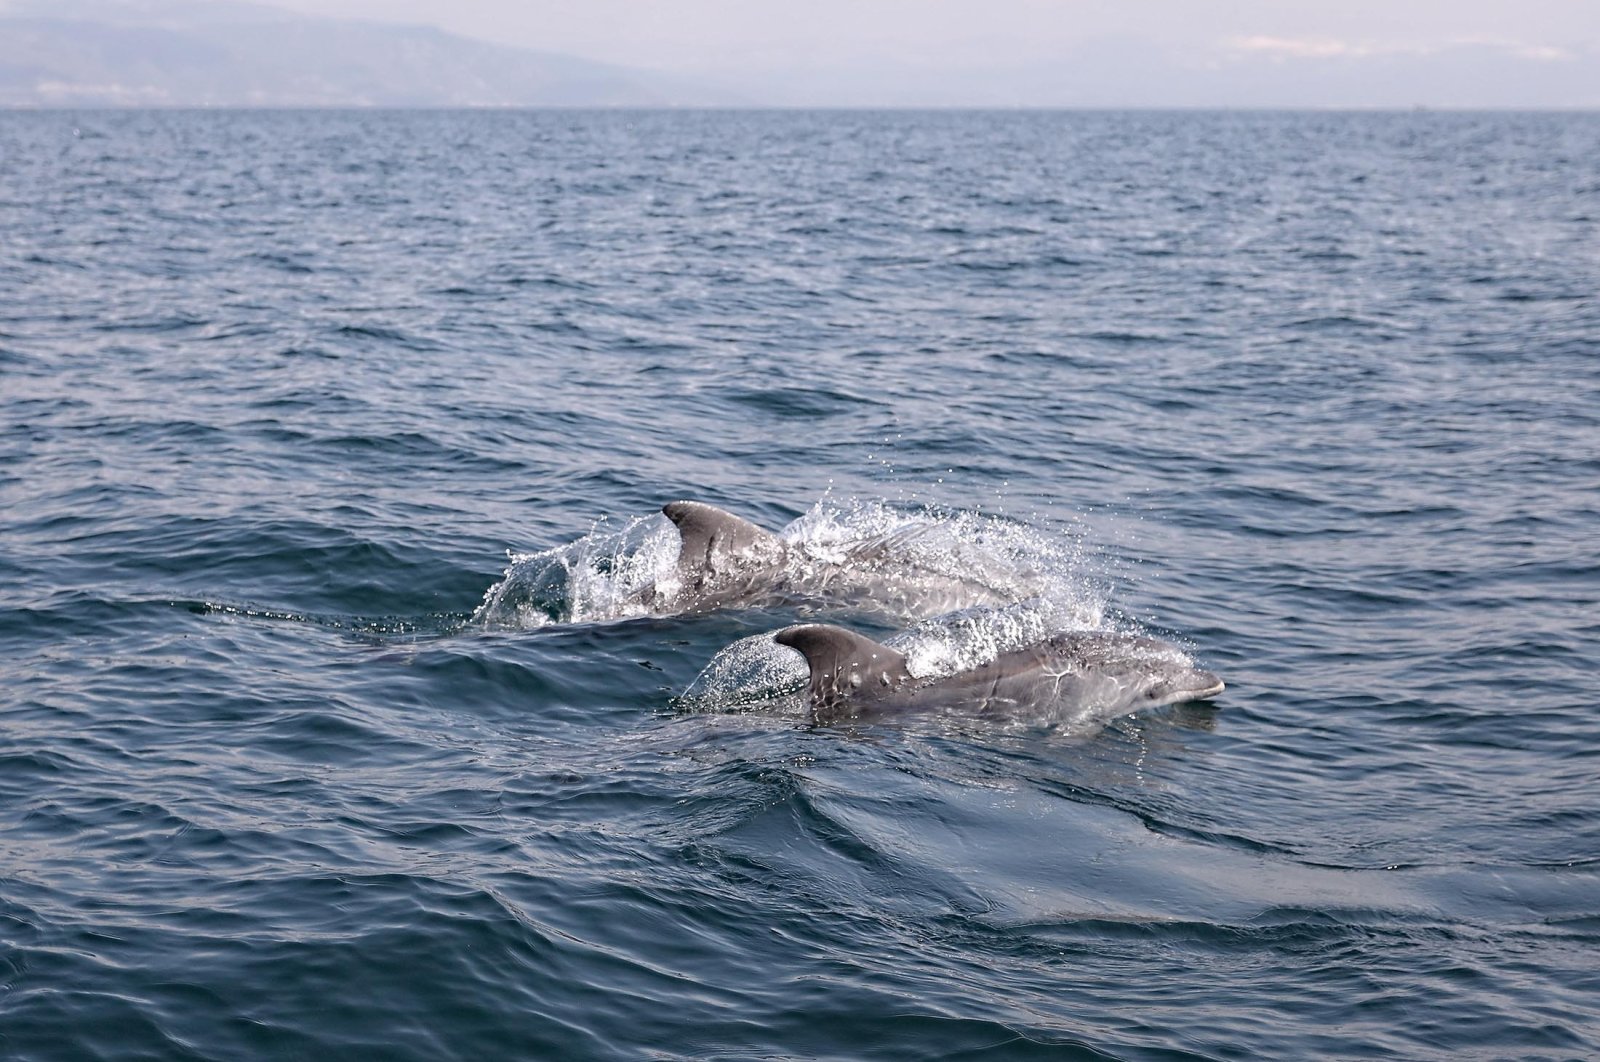 Dolphins are seen swimming off the coast of Mudanya district, in Bursa, northwestern Turkey, March 25, 2022. (İHA PHOTO)